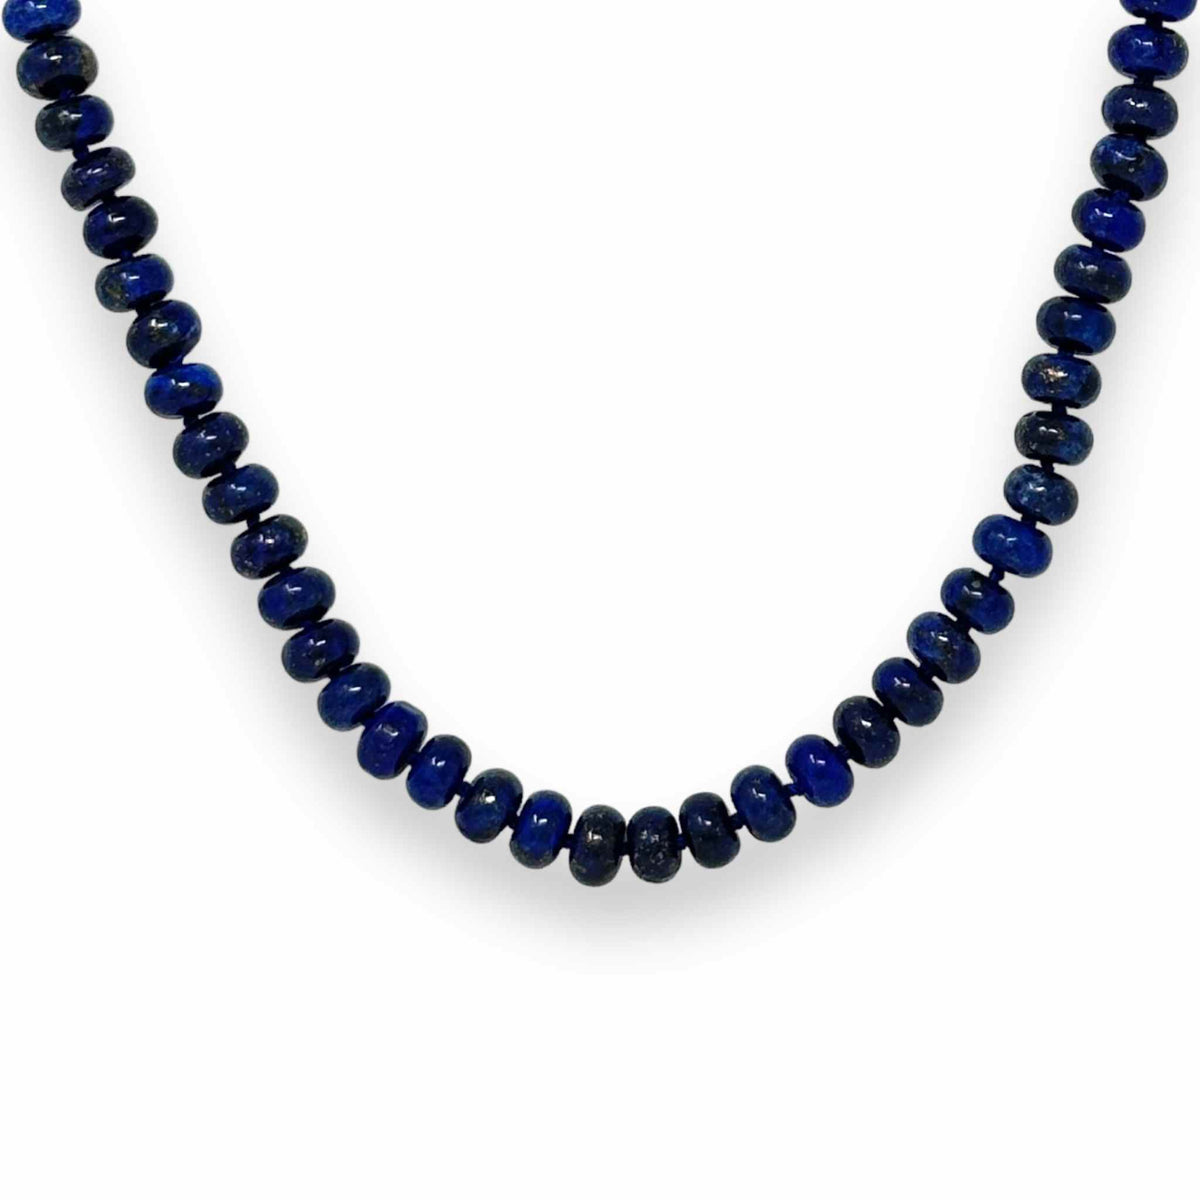 Lapis Lazuli necklace beaded shown hanging on white background